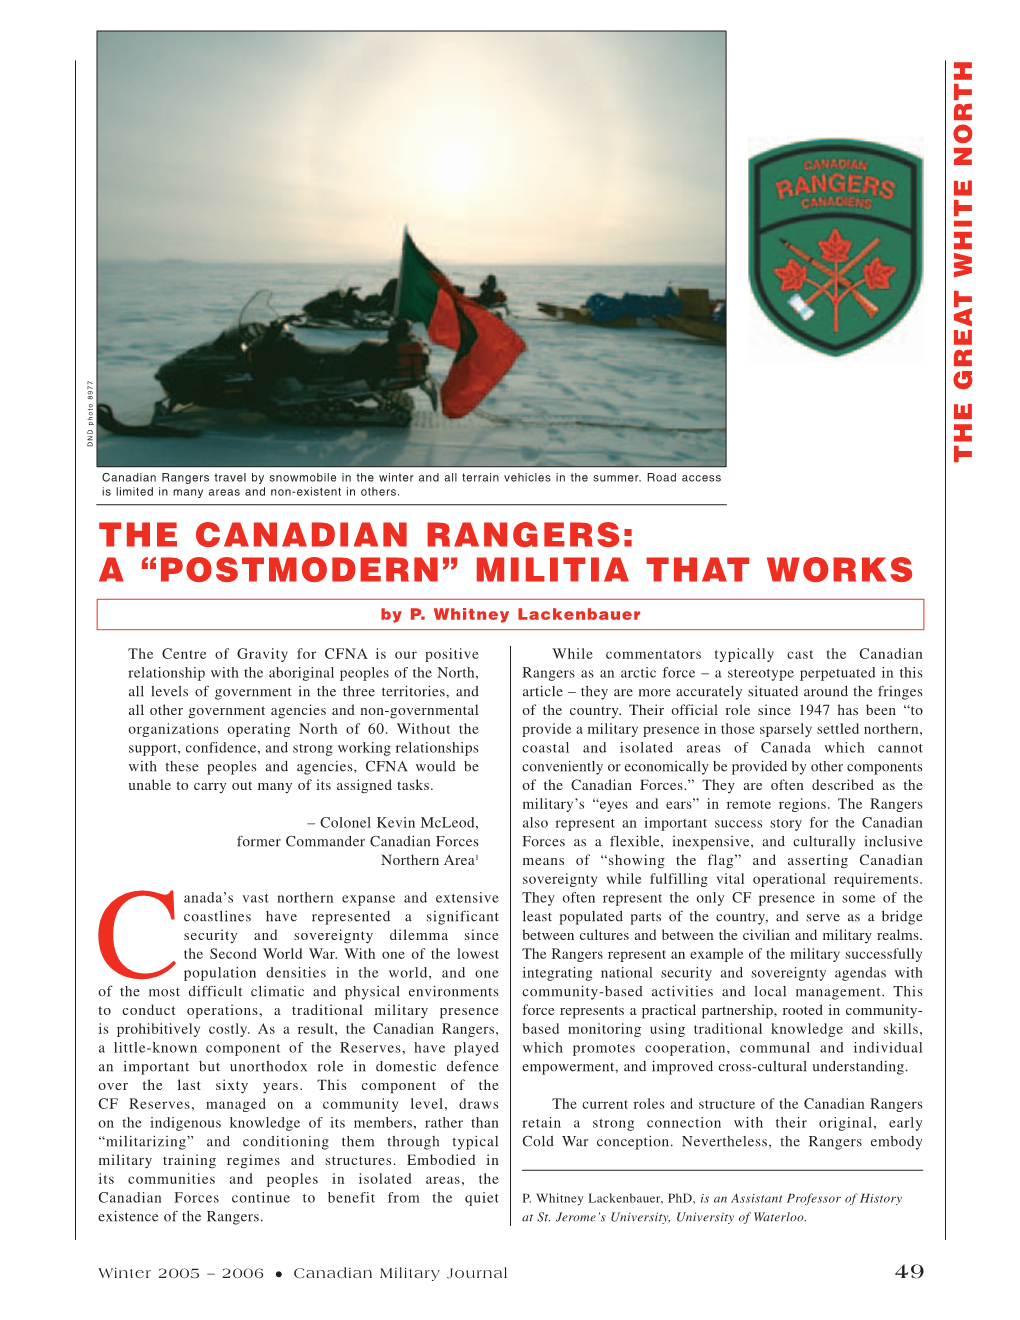 The Canadian Rangers: a “Postmodern” Militia That Works